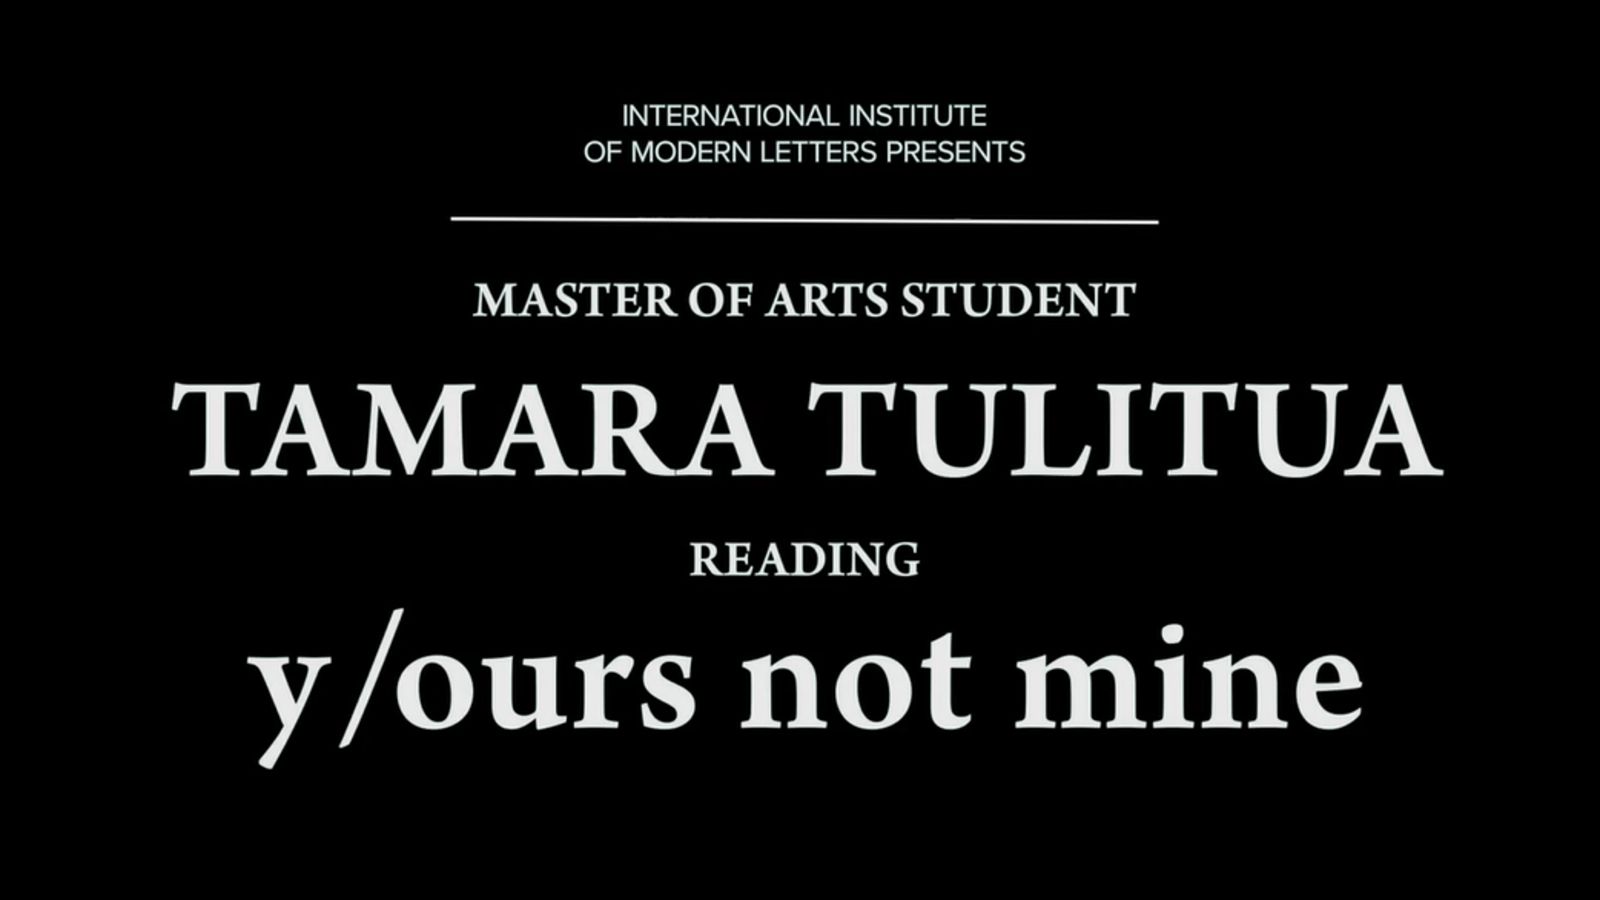 Master of Arts student Tamara Tulitua reading y/ours not mine